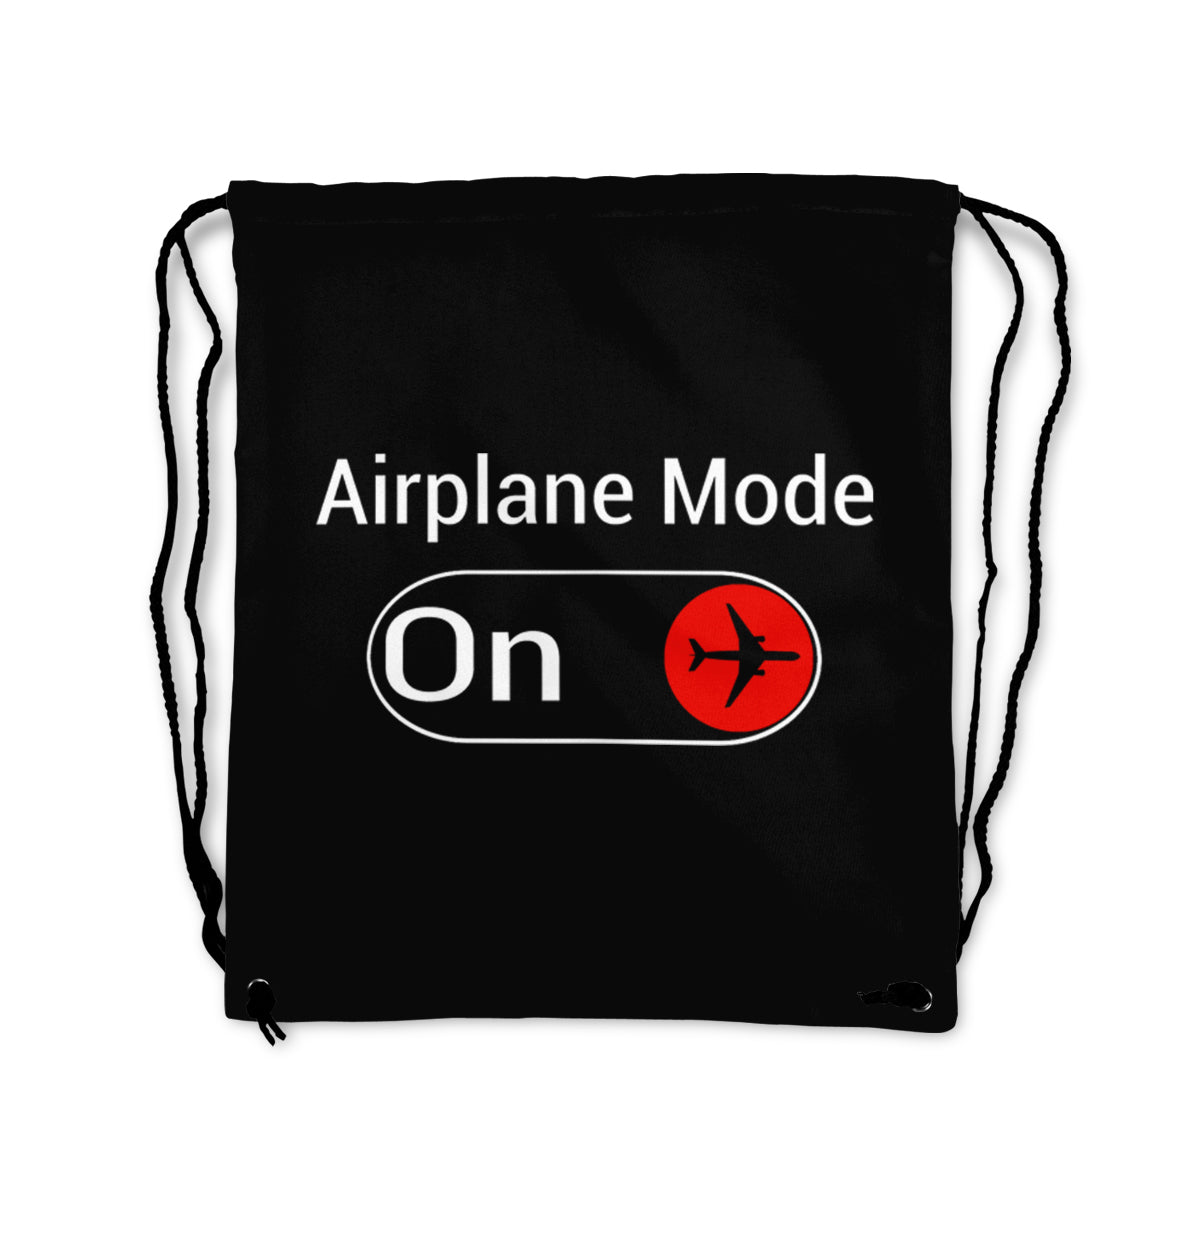 Airplane Mode On Designed Drawstring Bags